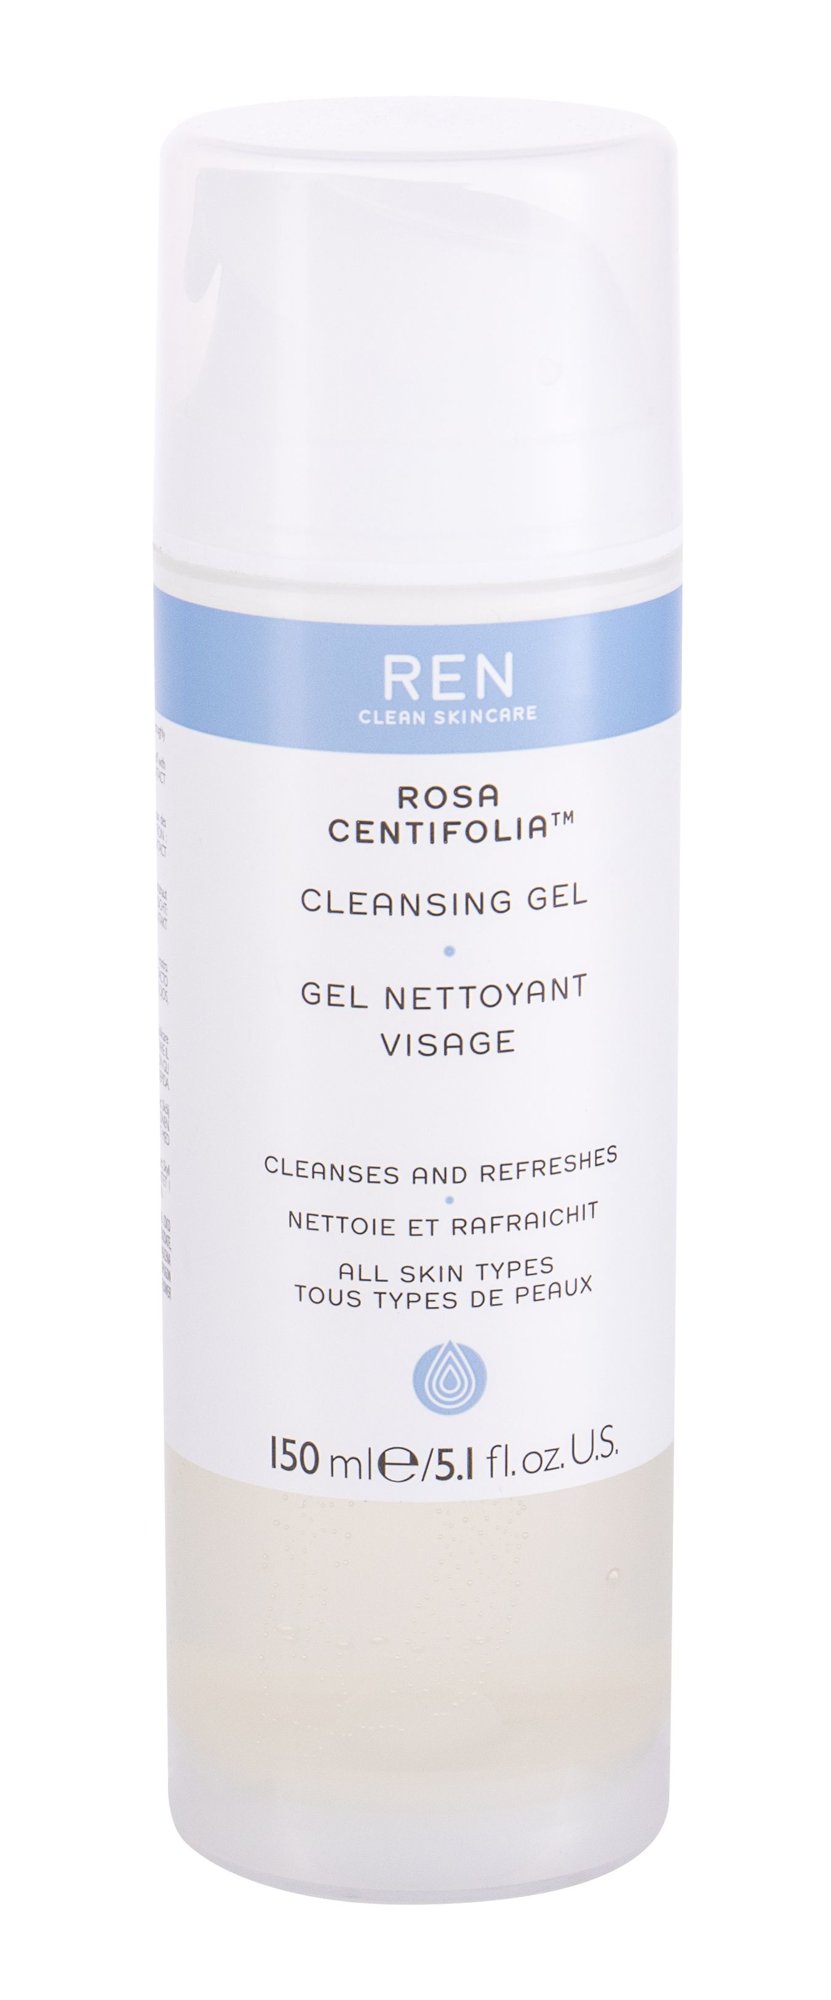 Ren Clean Skincare Rosa Centifolia veido gelis